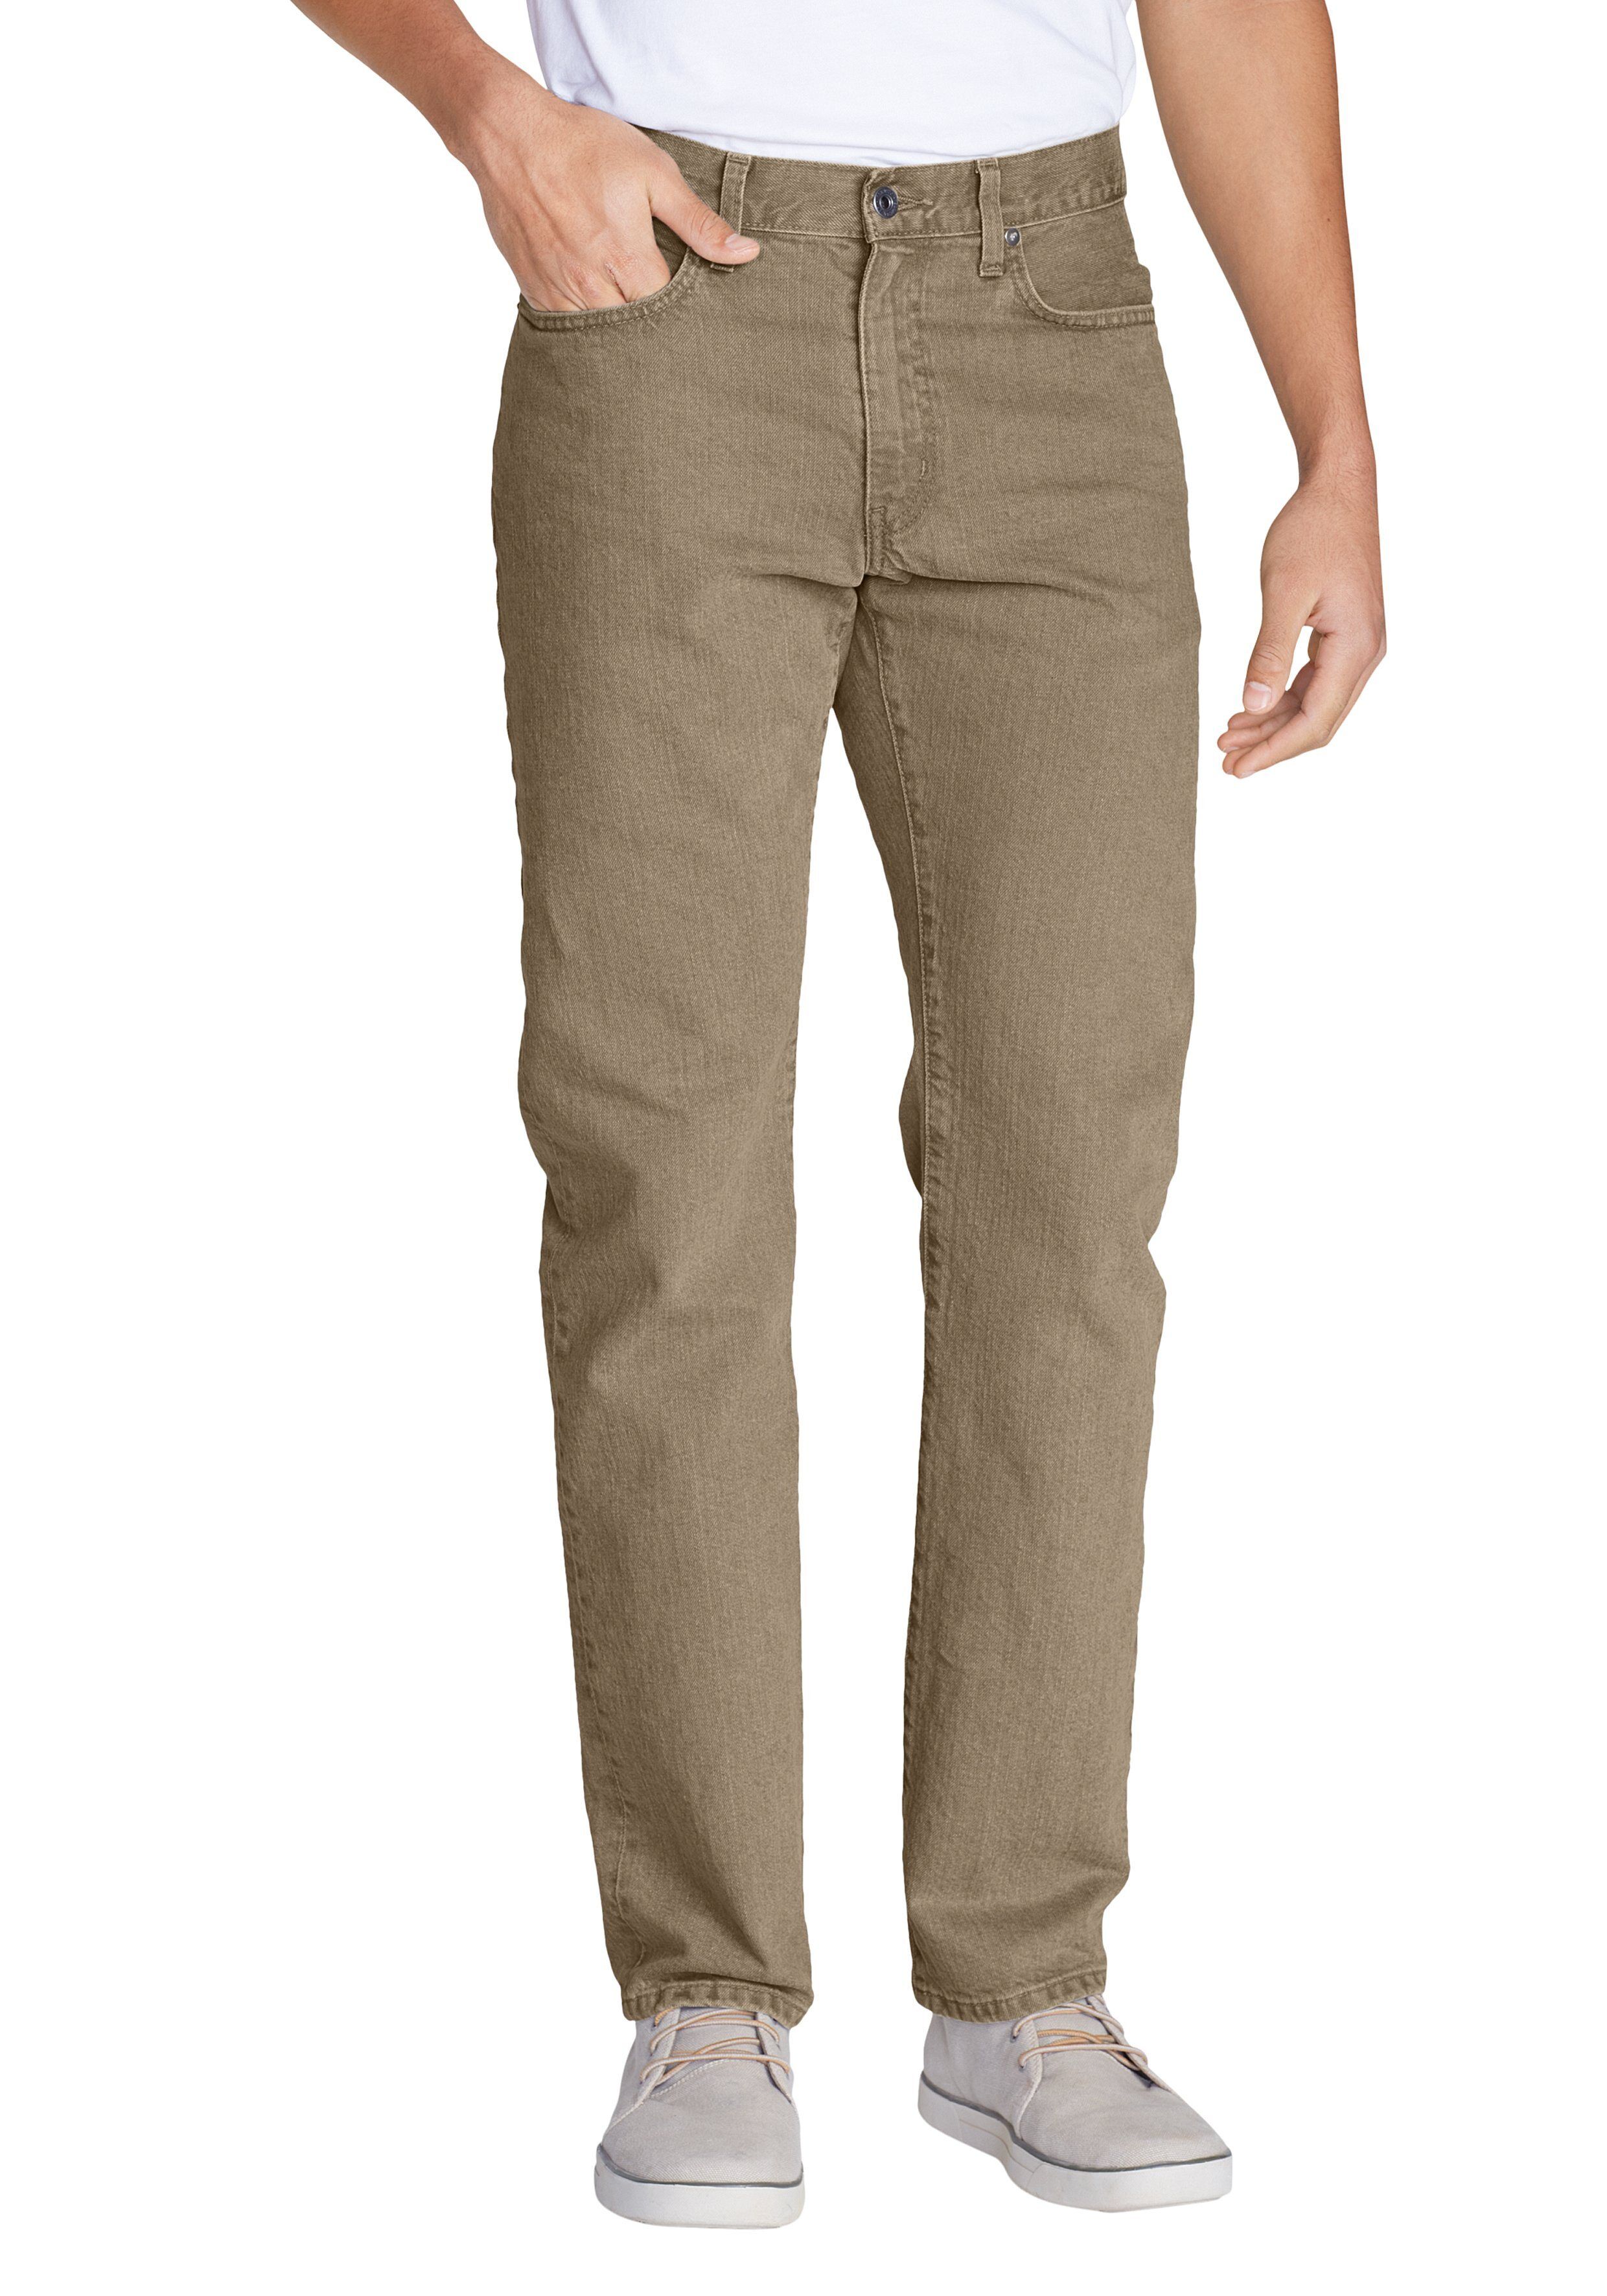 Eddie Bauer 5-Pocket-Jeans Flex - Slim Fit, khaki